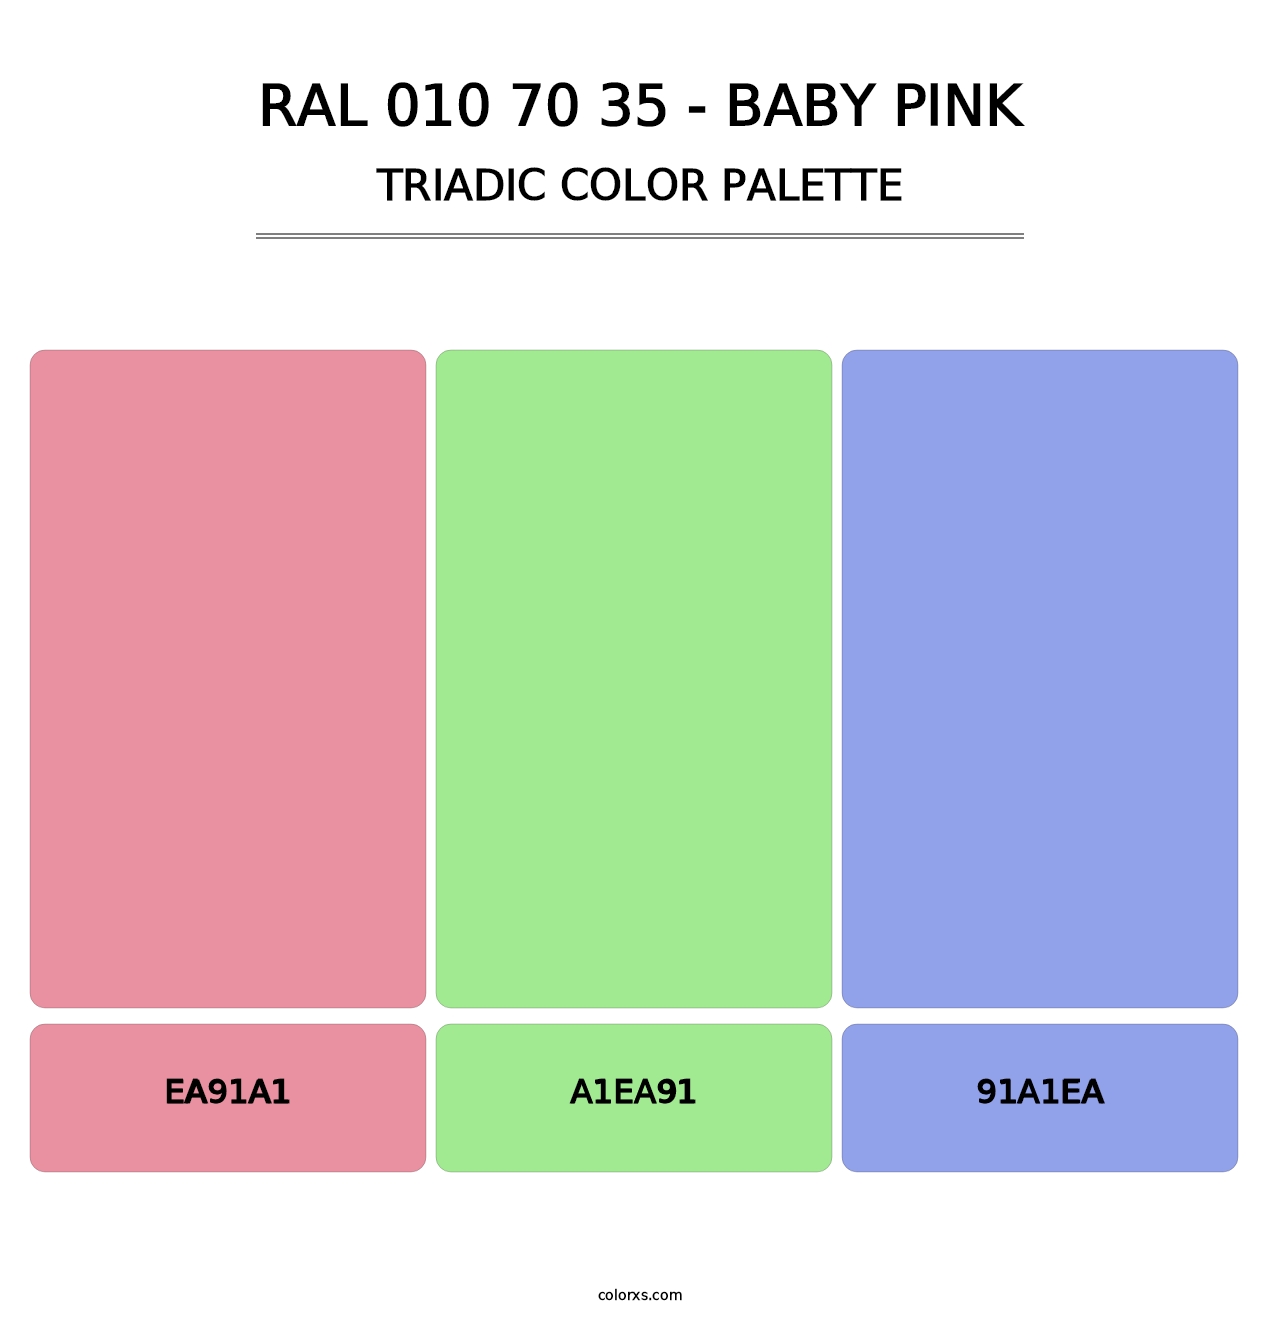 RAL 010 70 35 - Baby Pink - Triadic Color Palette